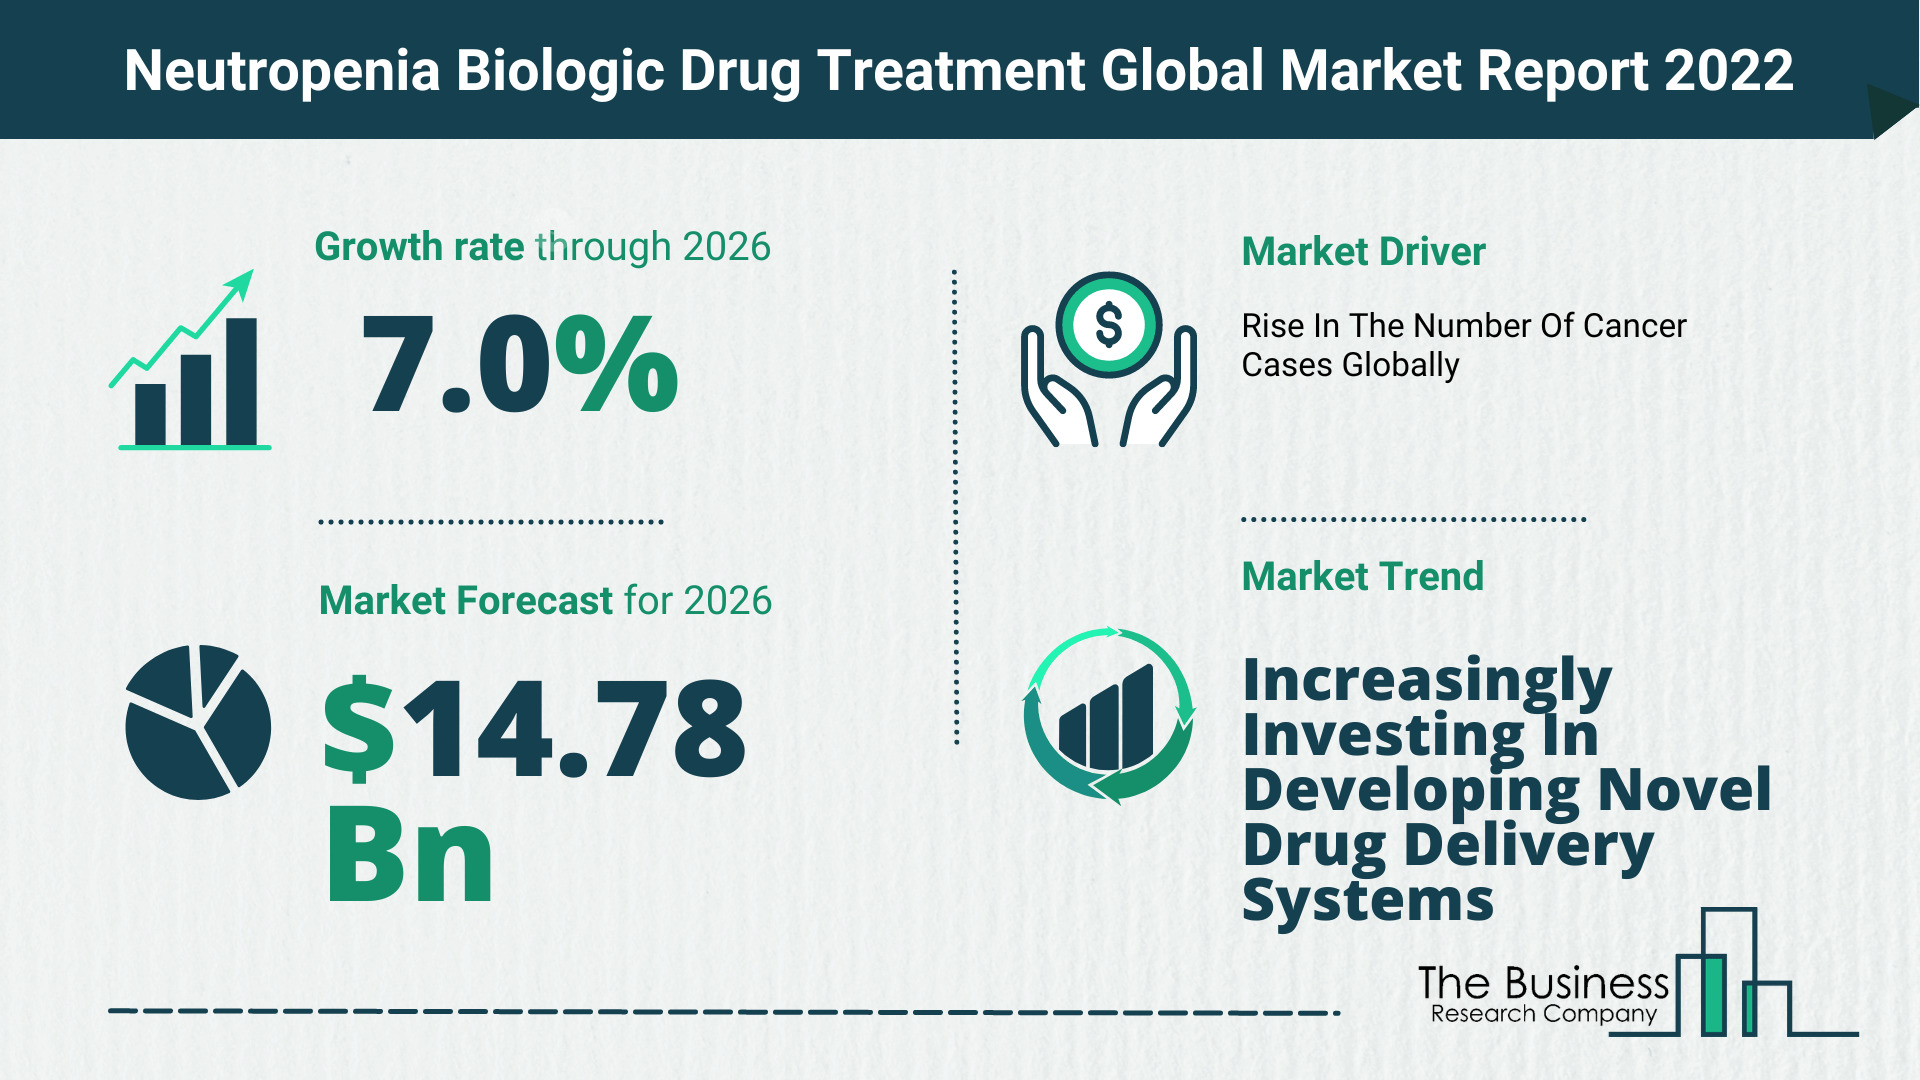 How Will The Neutropenia Biologic Drug Treatment Market Grow In 2022?